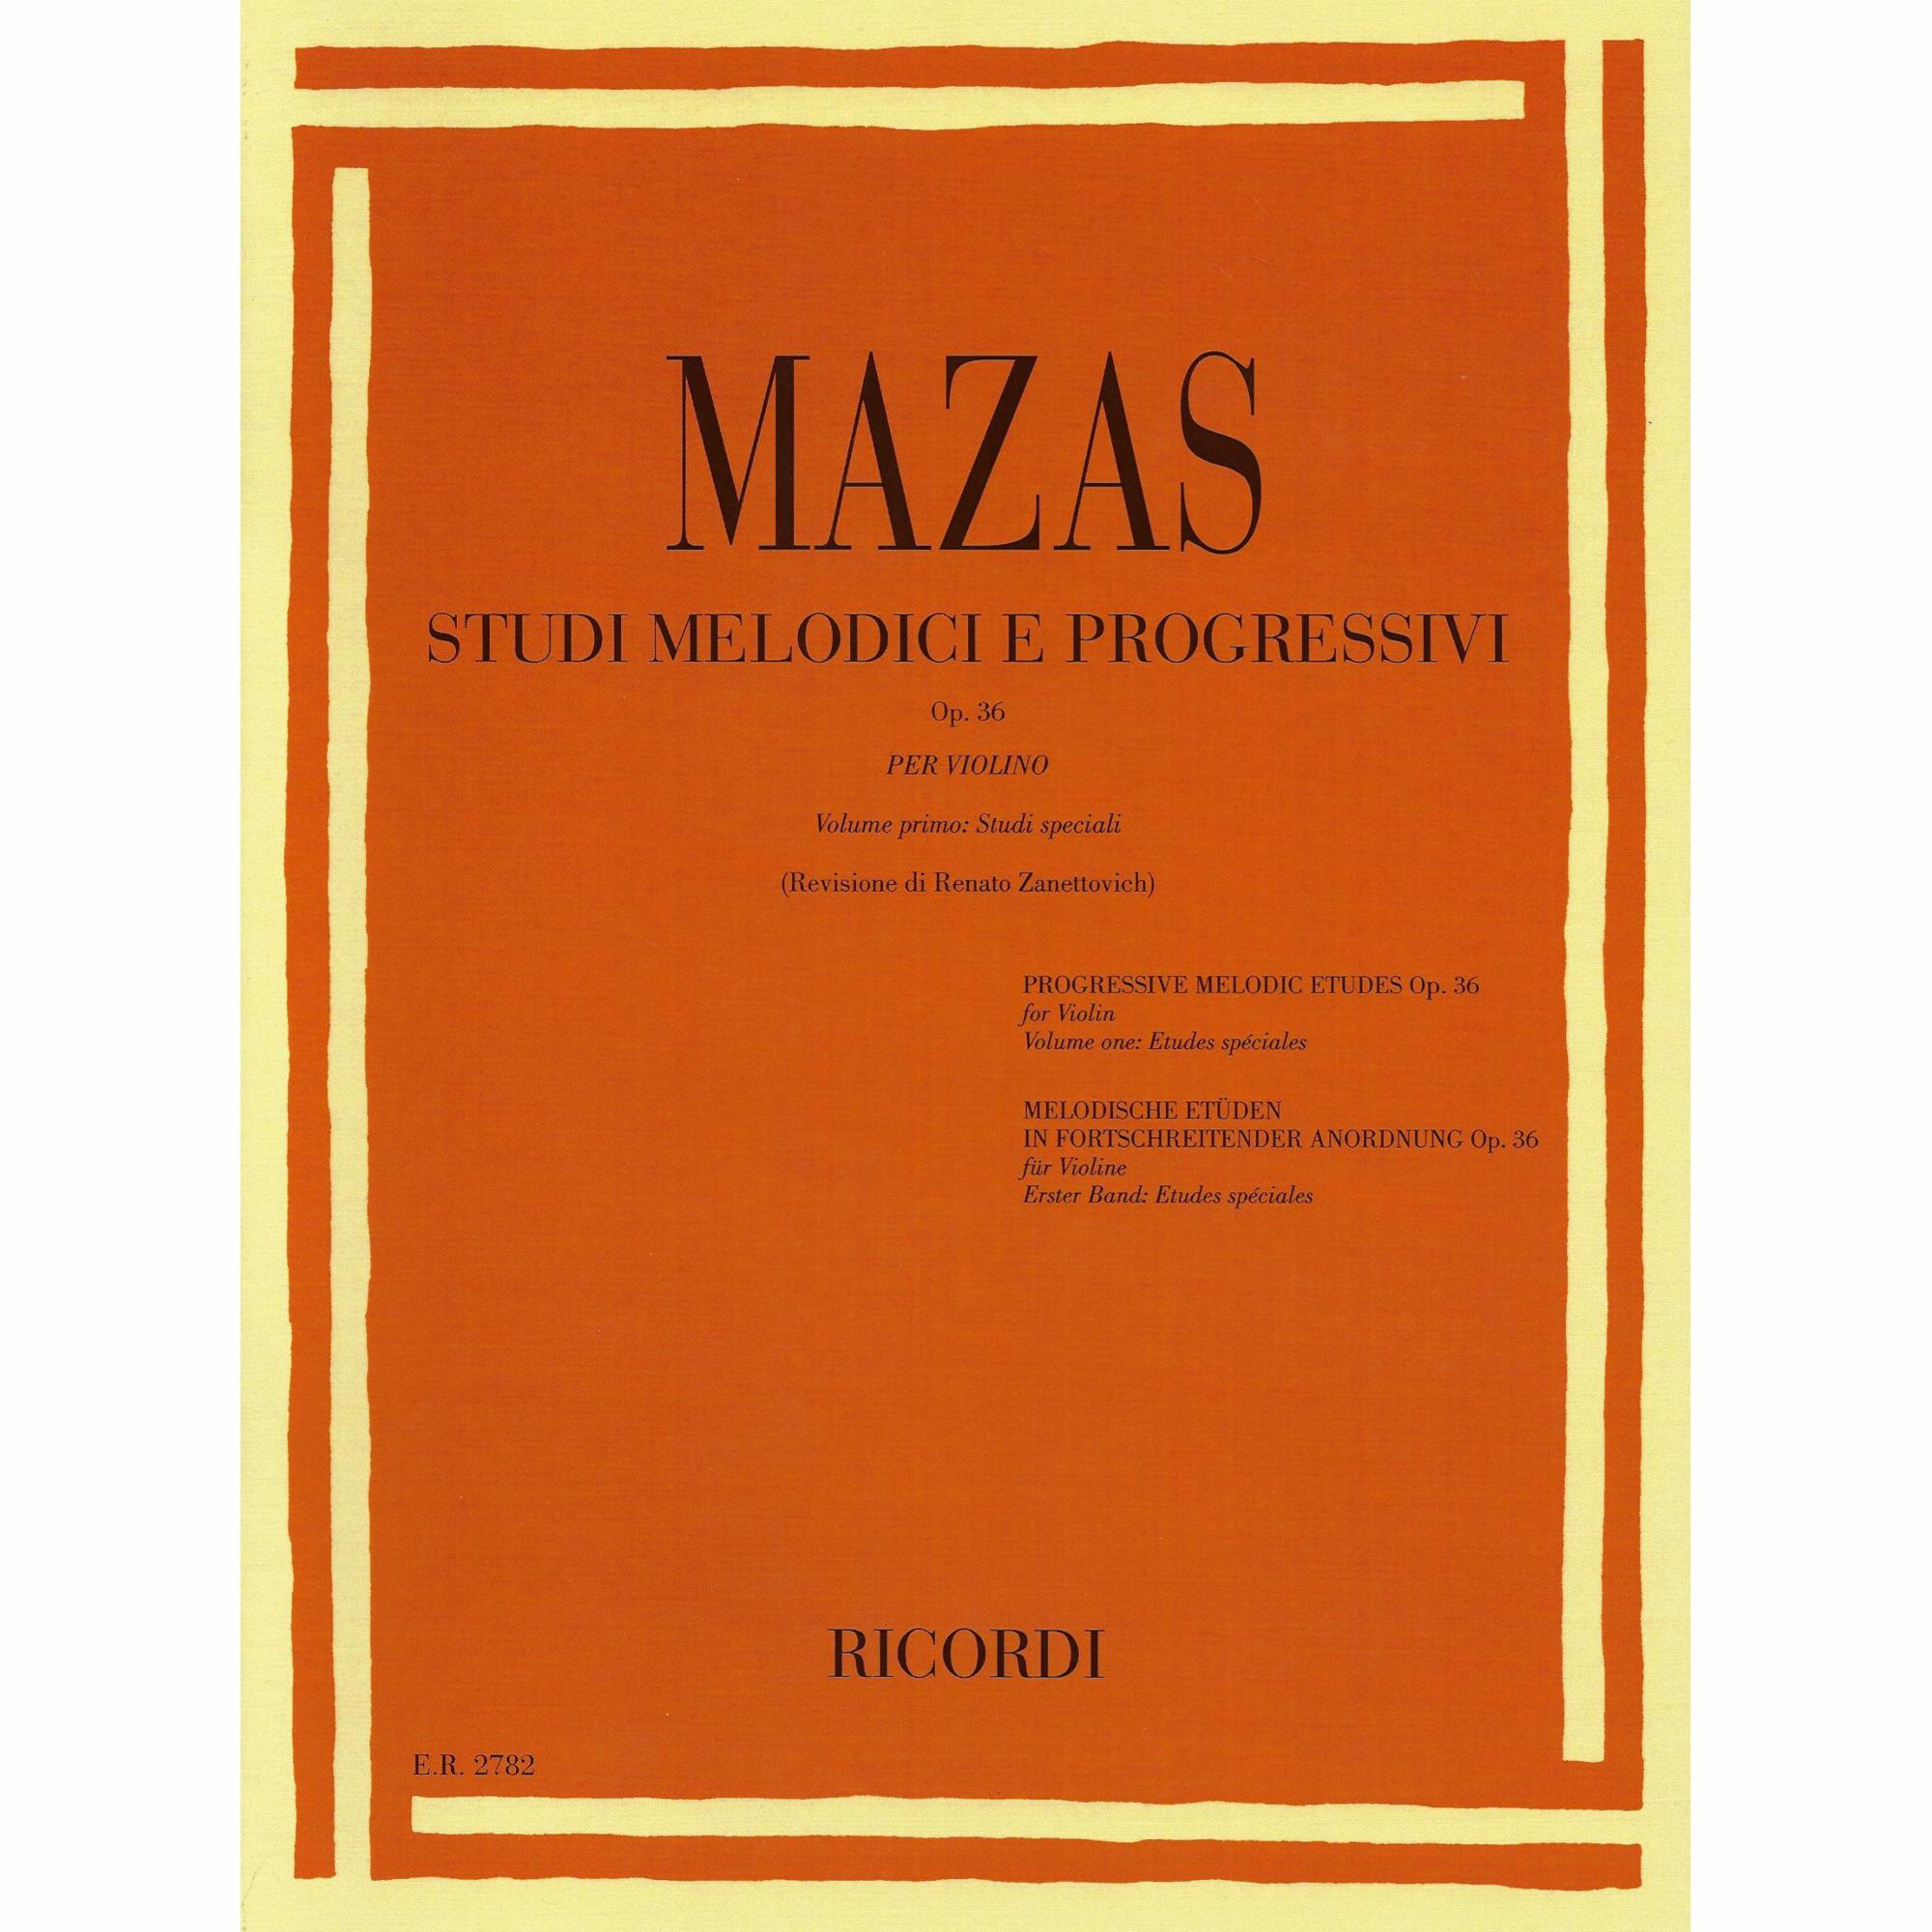 Mazas -- Progressive Melodic Etudes, Op. 36, Volumes 1-2 for Violin